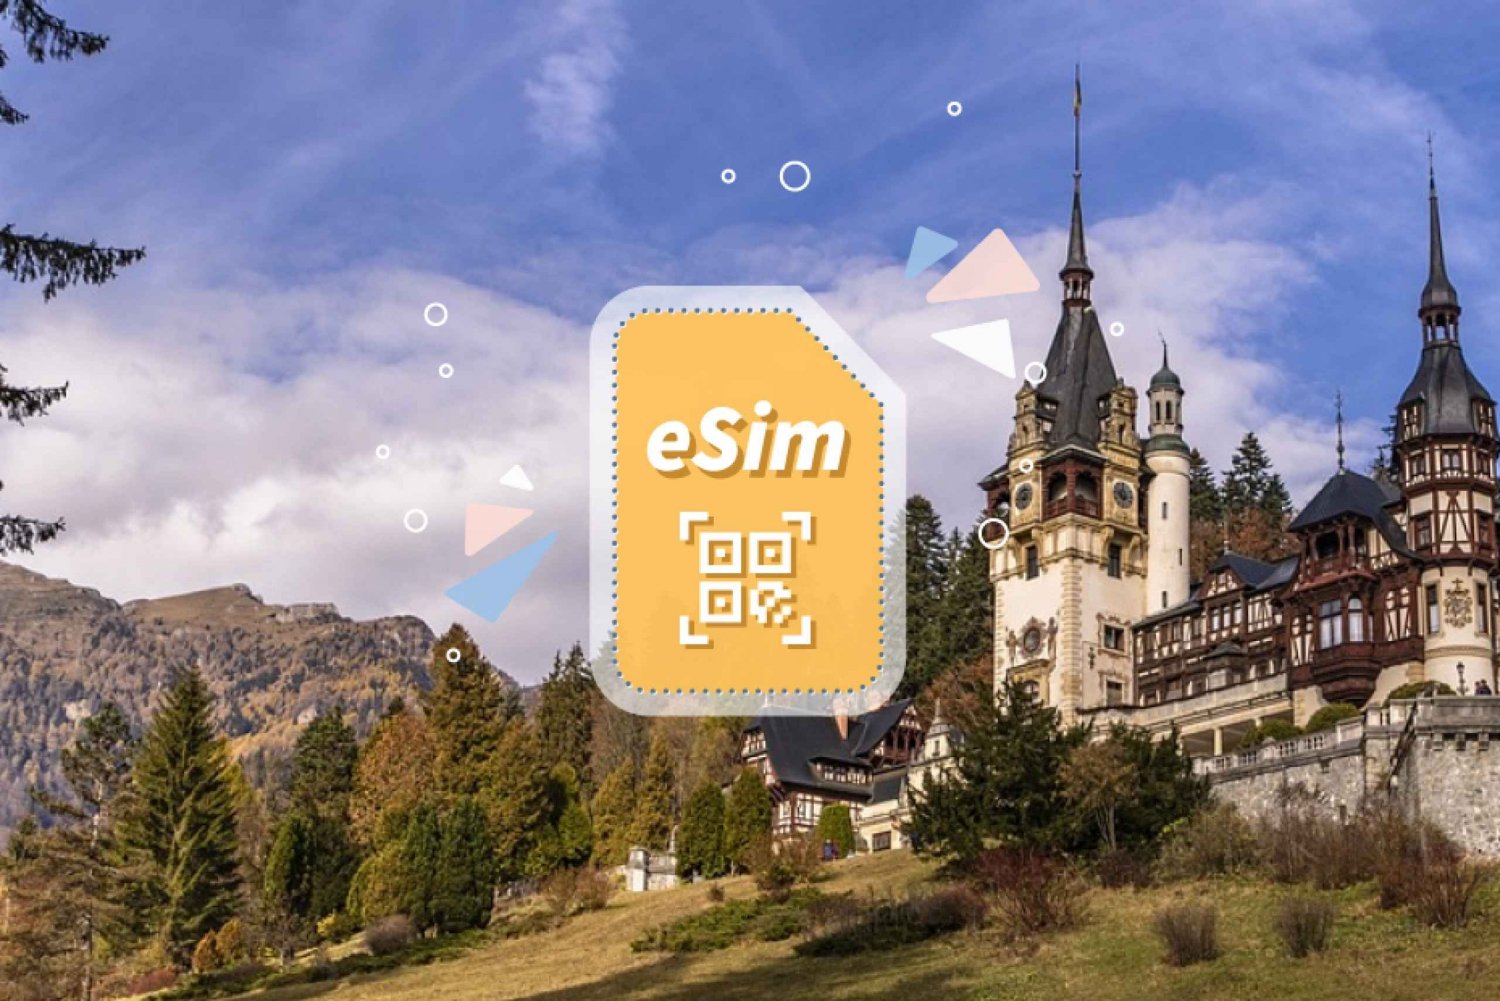 Romania/Europe: eSim Mobile Data Plan